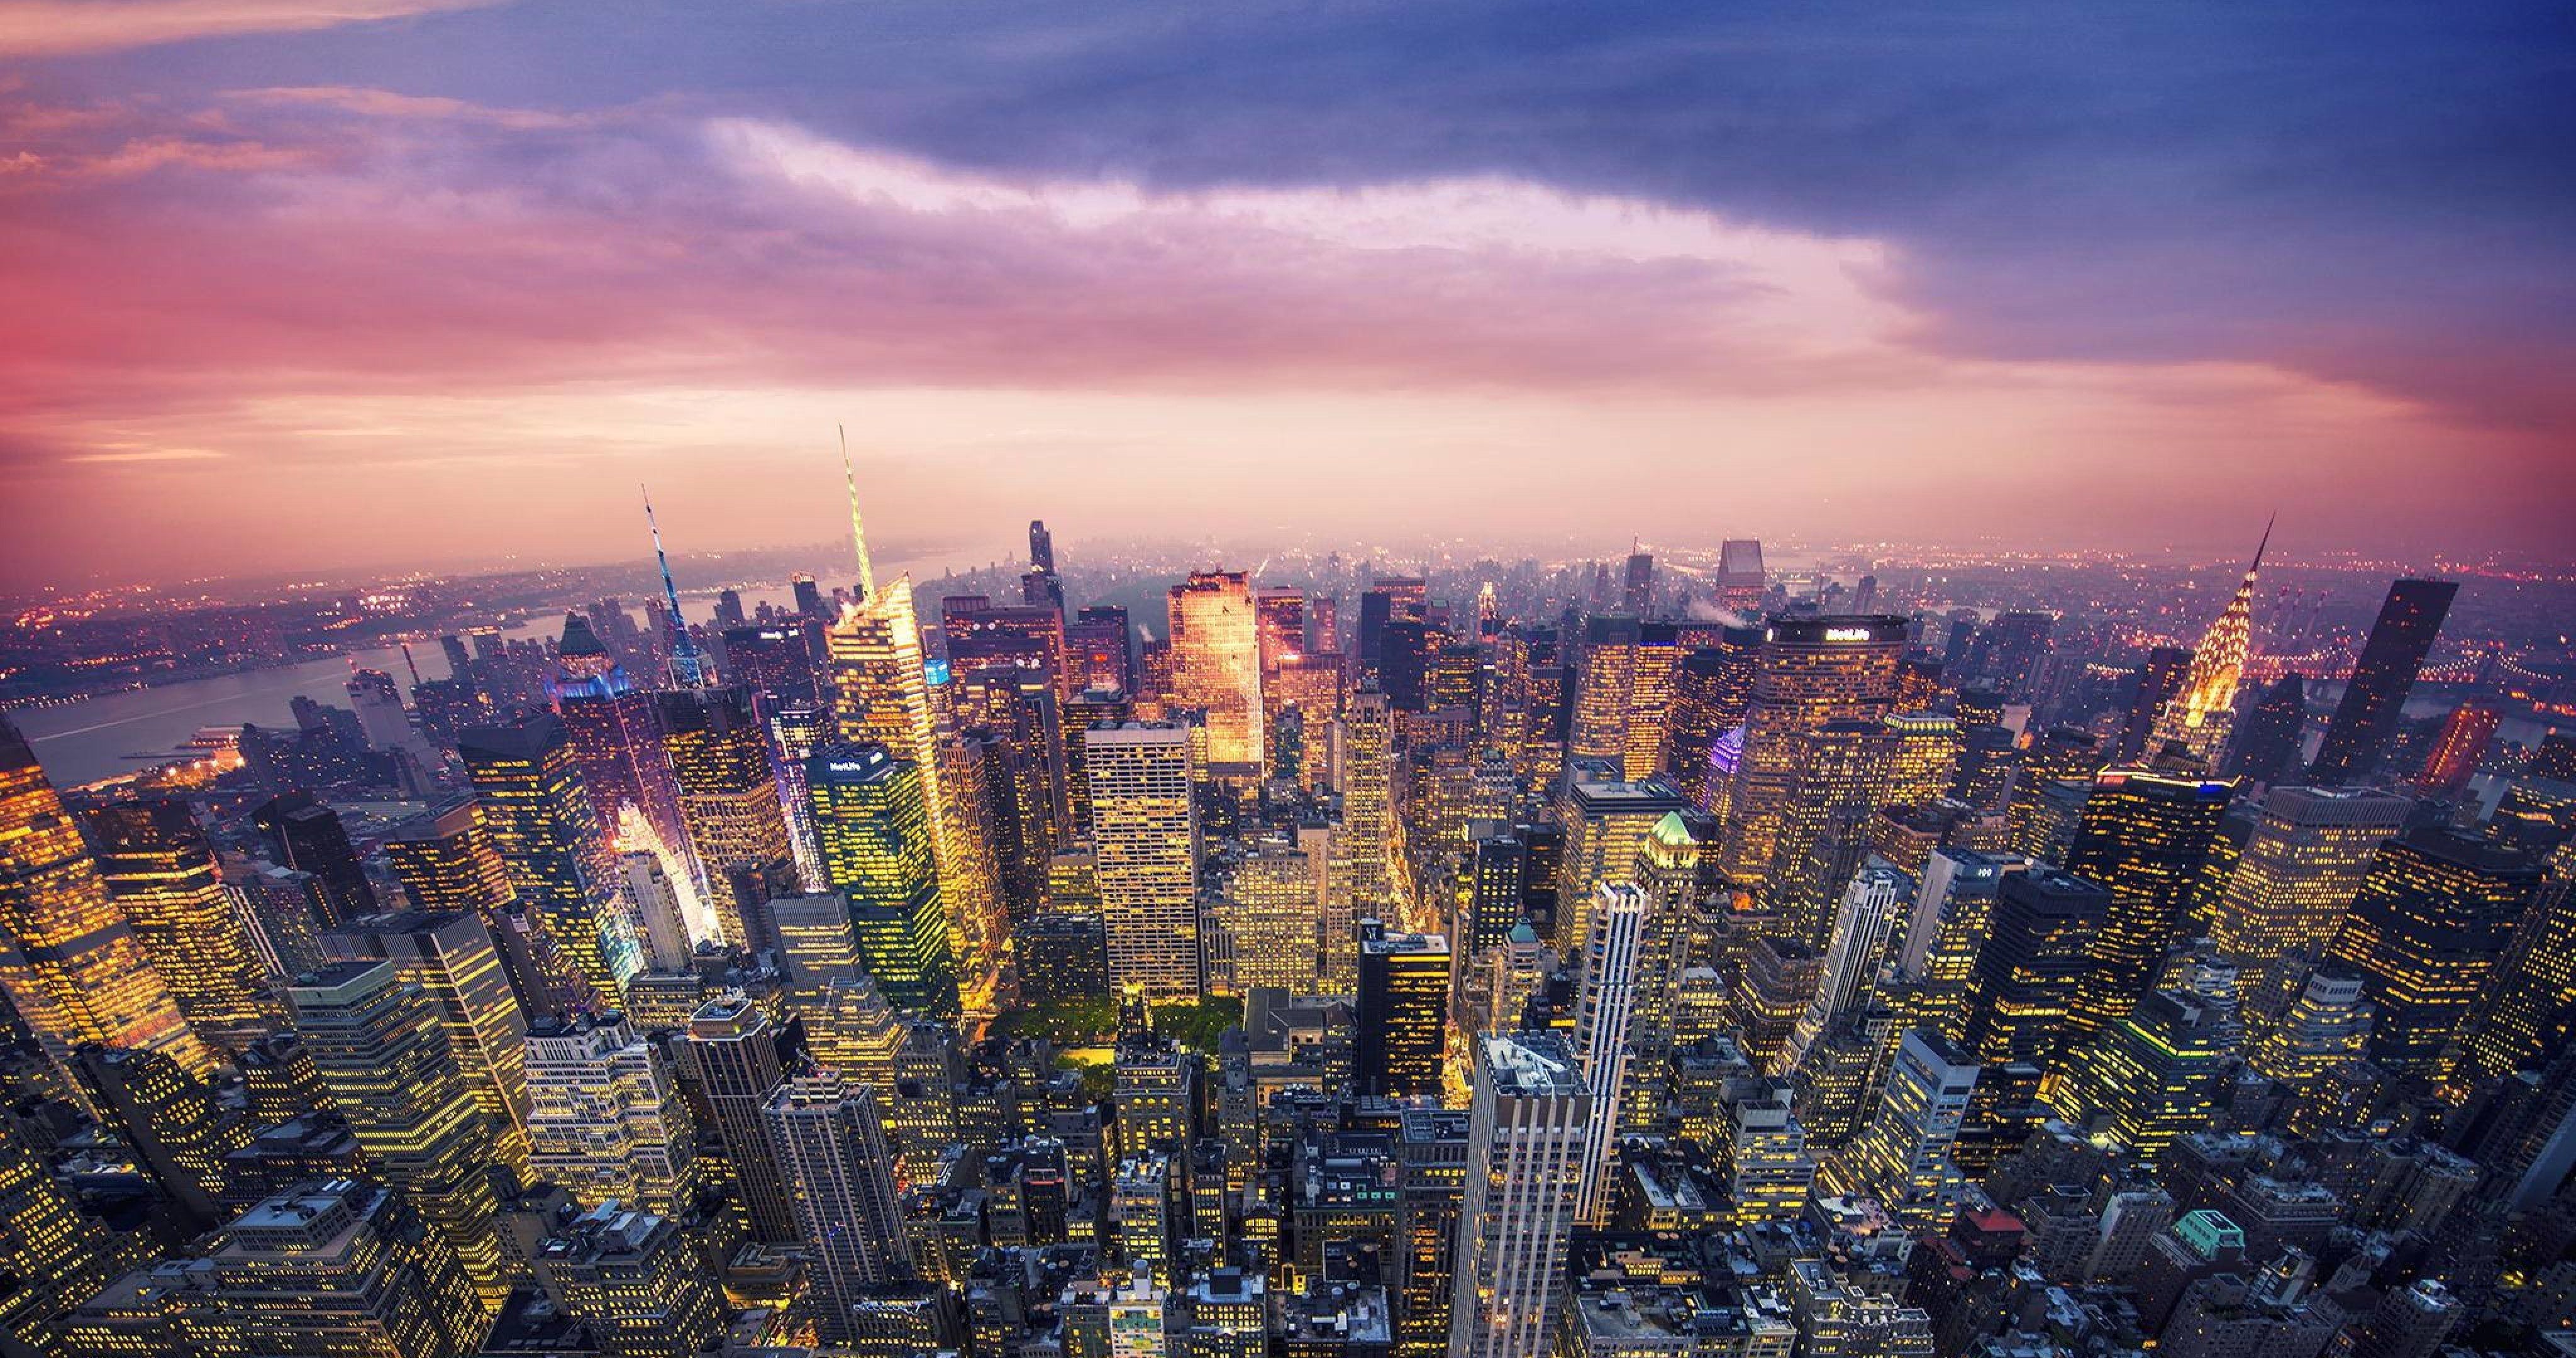 skyscapers in new york 4k ultra HD wallpaper. New york wallpaper, Wallpaper, New york picture